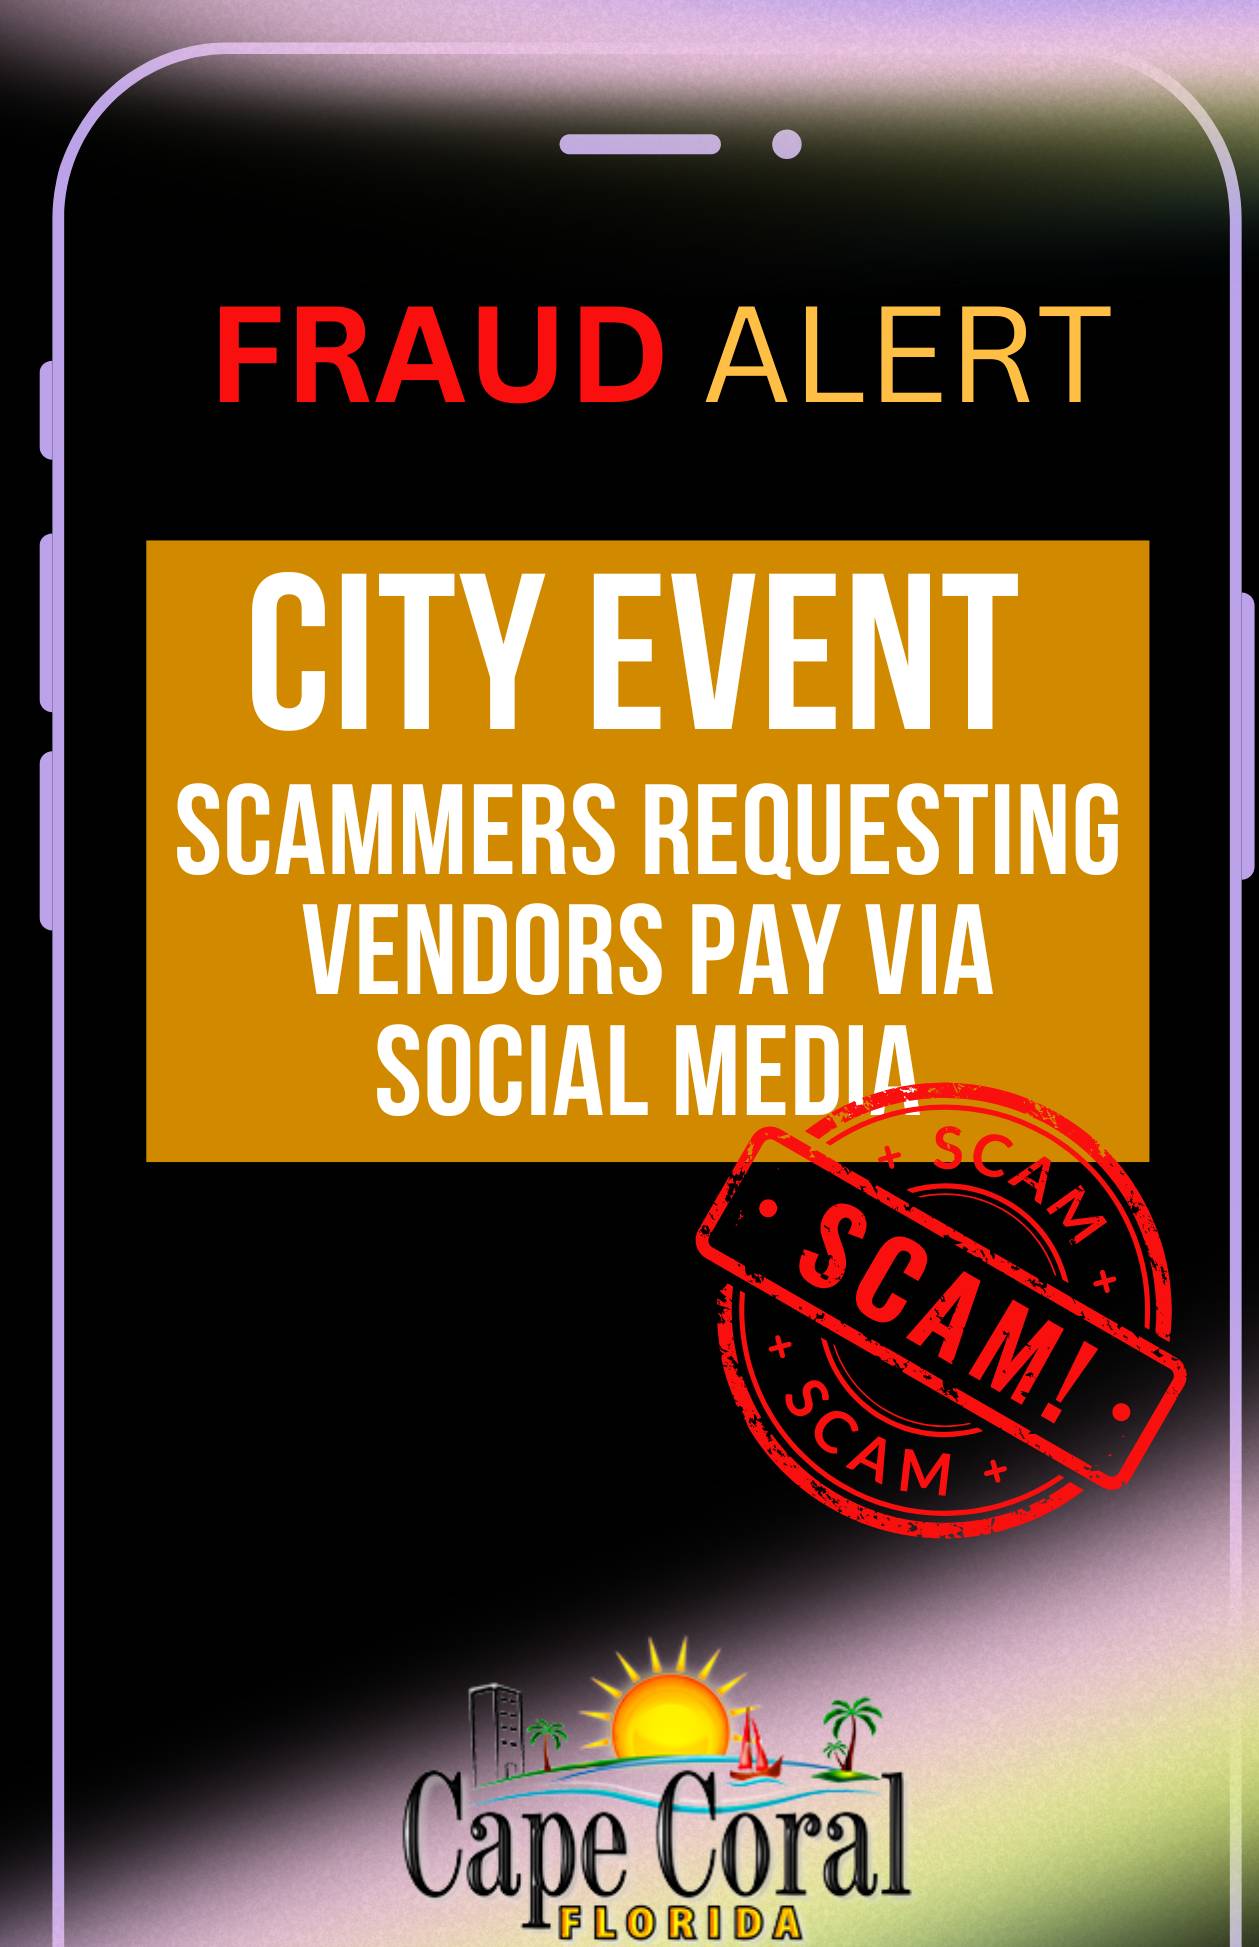 scam alert (2) - Copy